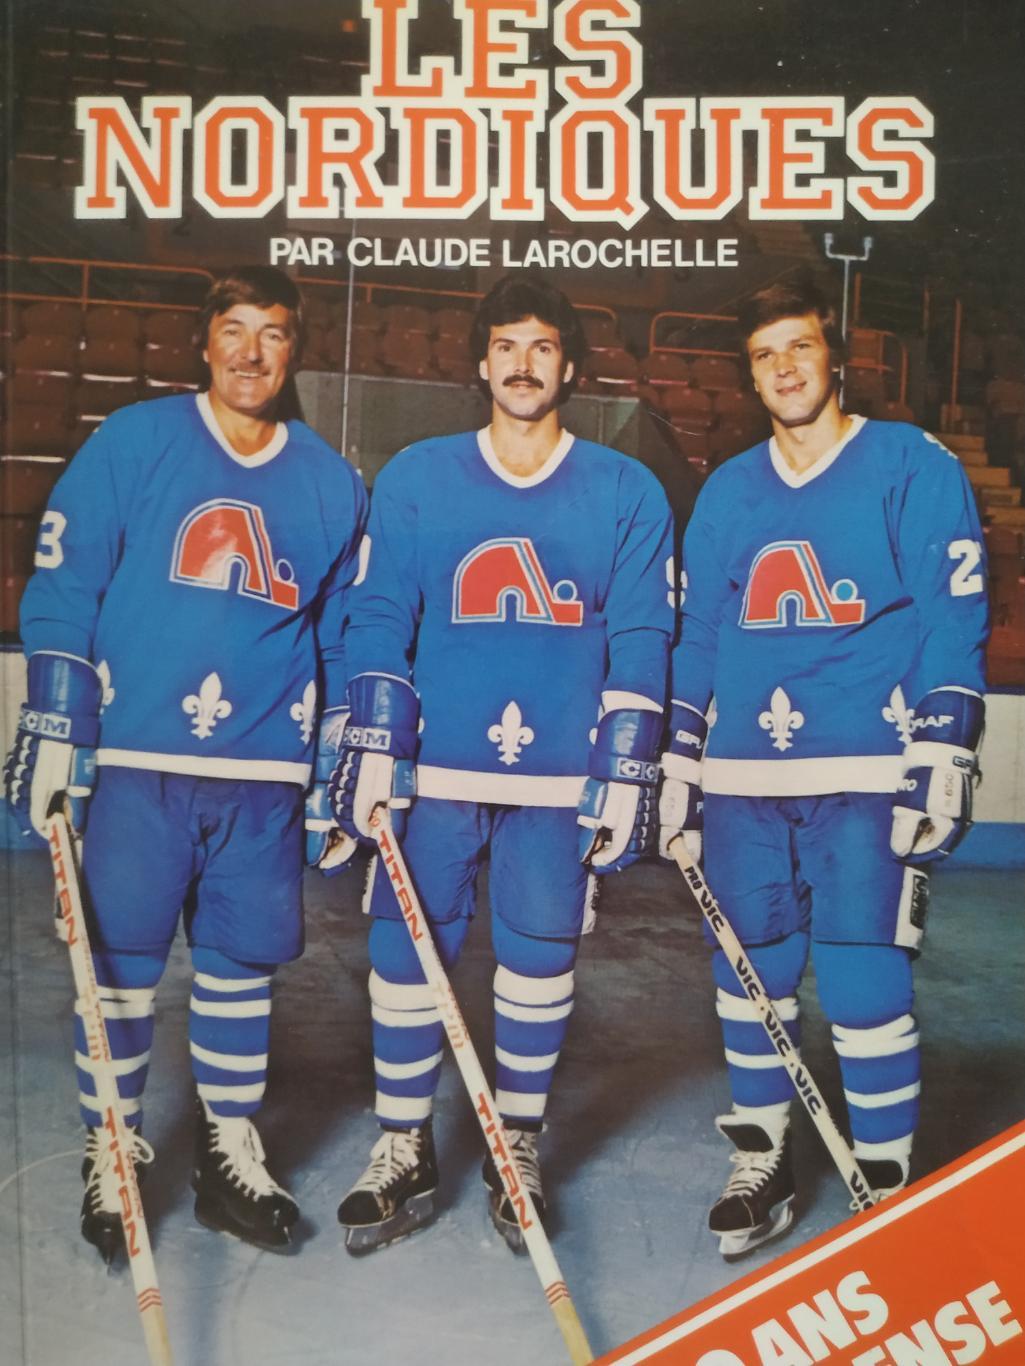 ХОККЕЙ КНИГА НХЛ НОРДИКС 10 ЛЕТ КОМАНДЕ 1982 LES NORDIQUES by CLAUDE LAROCHELLE